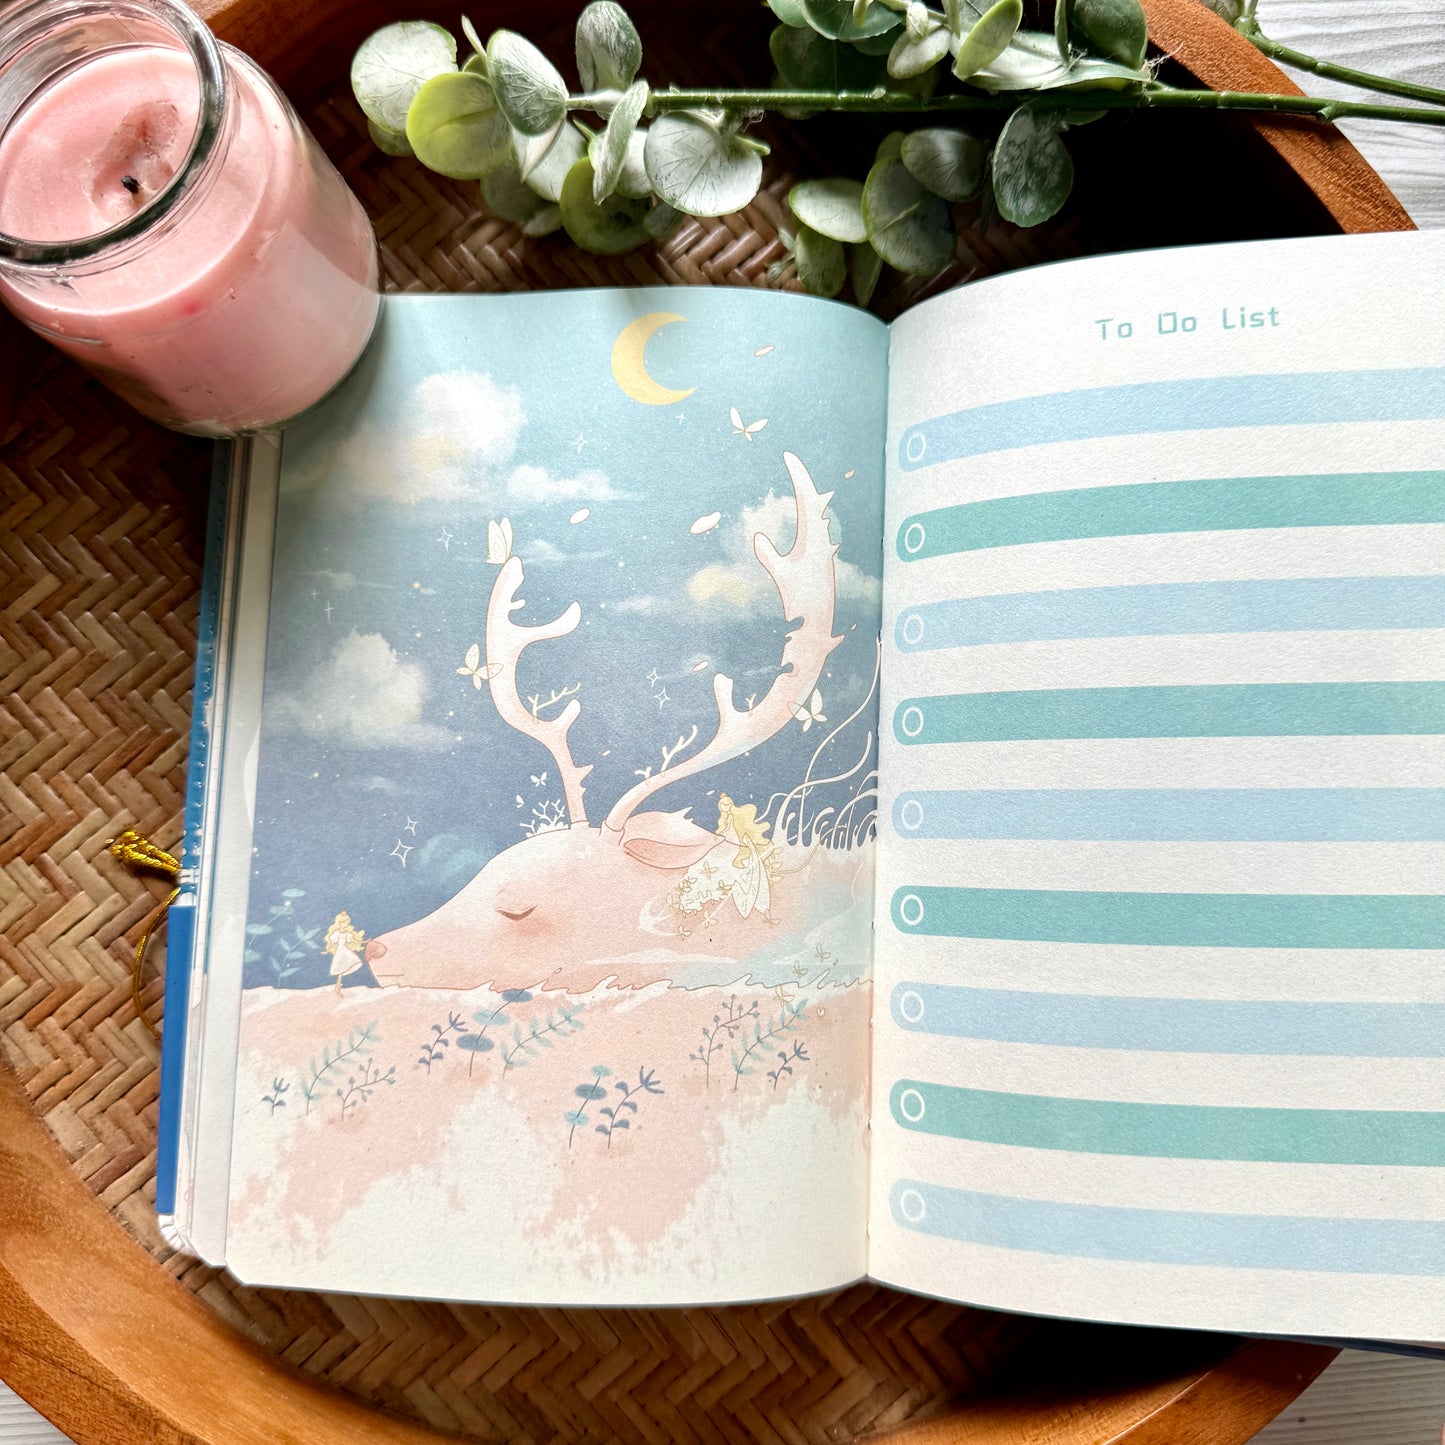 JGPB321124 d Kawaii Dream Premium Notebook | Diary | Undated Planner